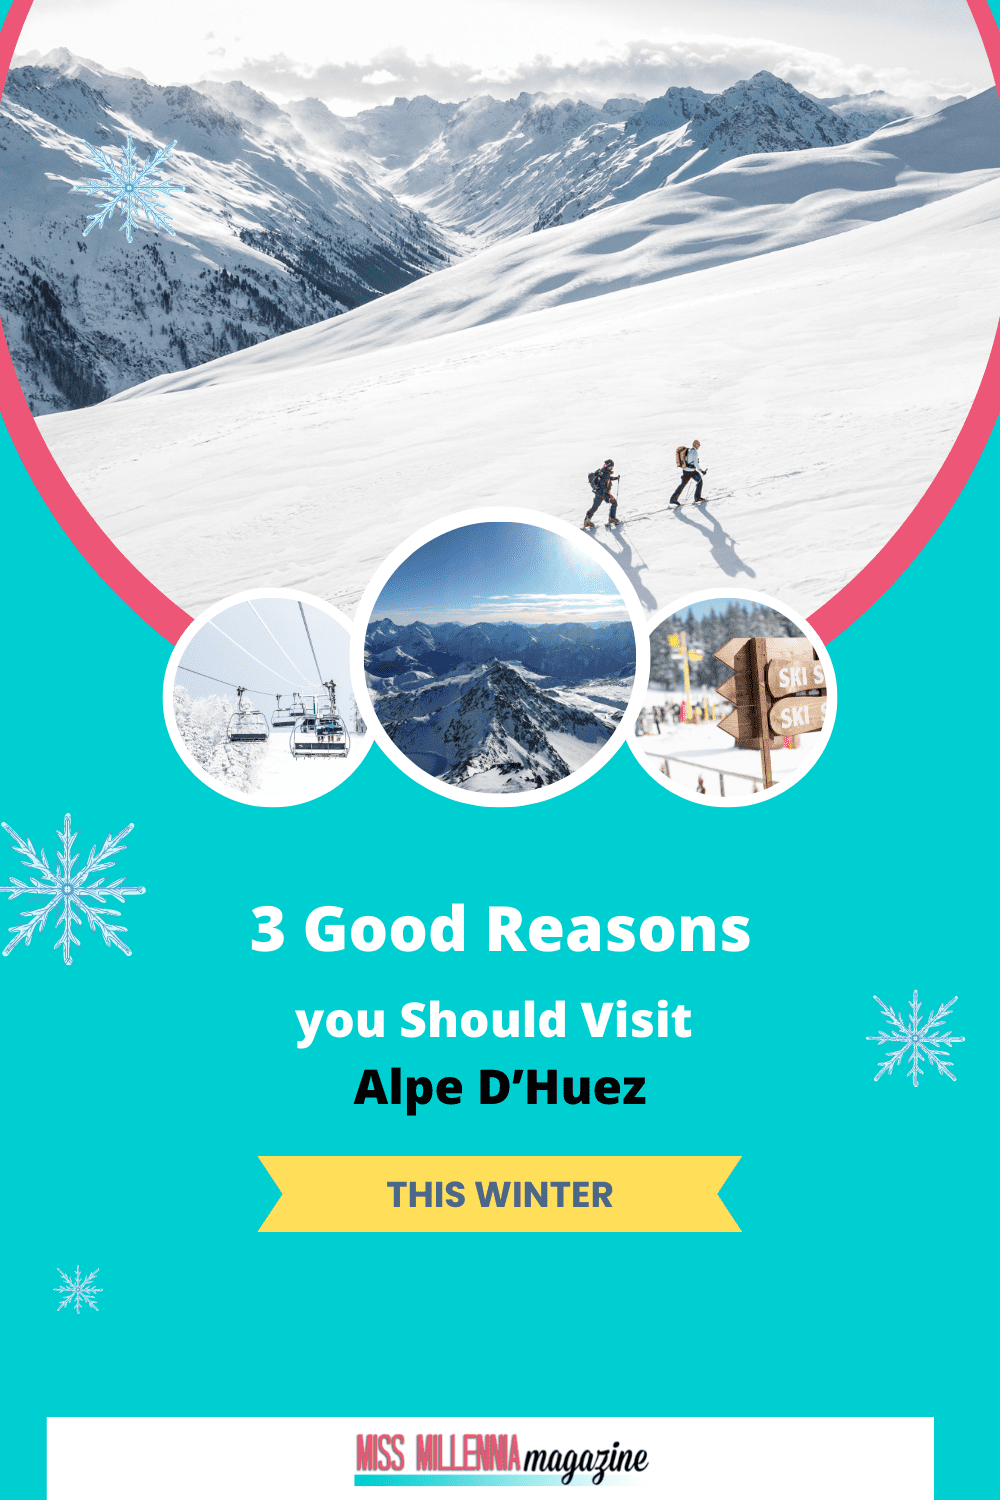 3 Good Reasons you Should Visit Alpe D’Huez This Winter